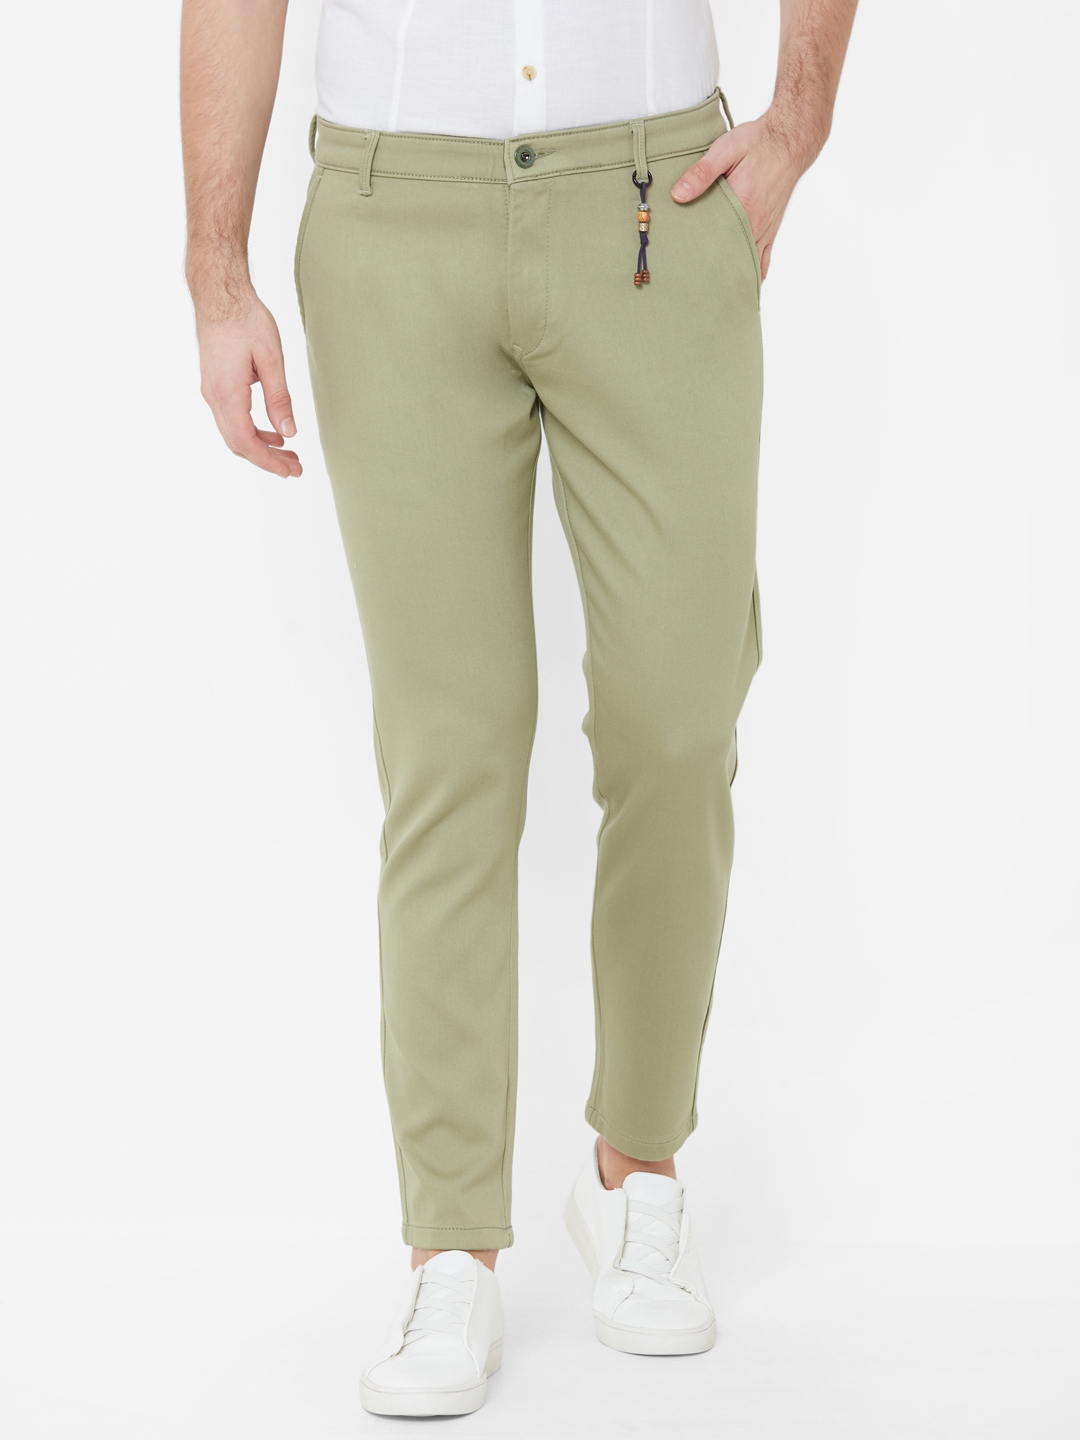 Livewire Men's Cotton Lycra Light Green Slim Fit Solid Trouser